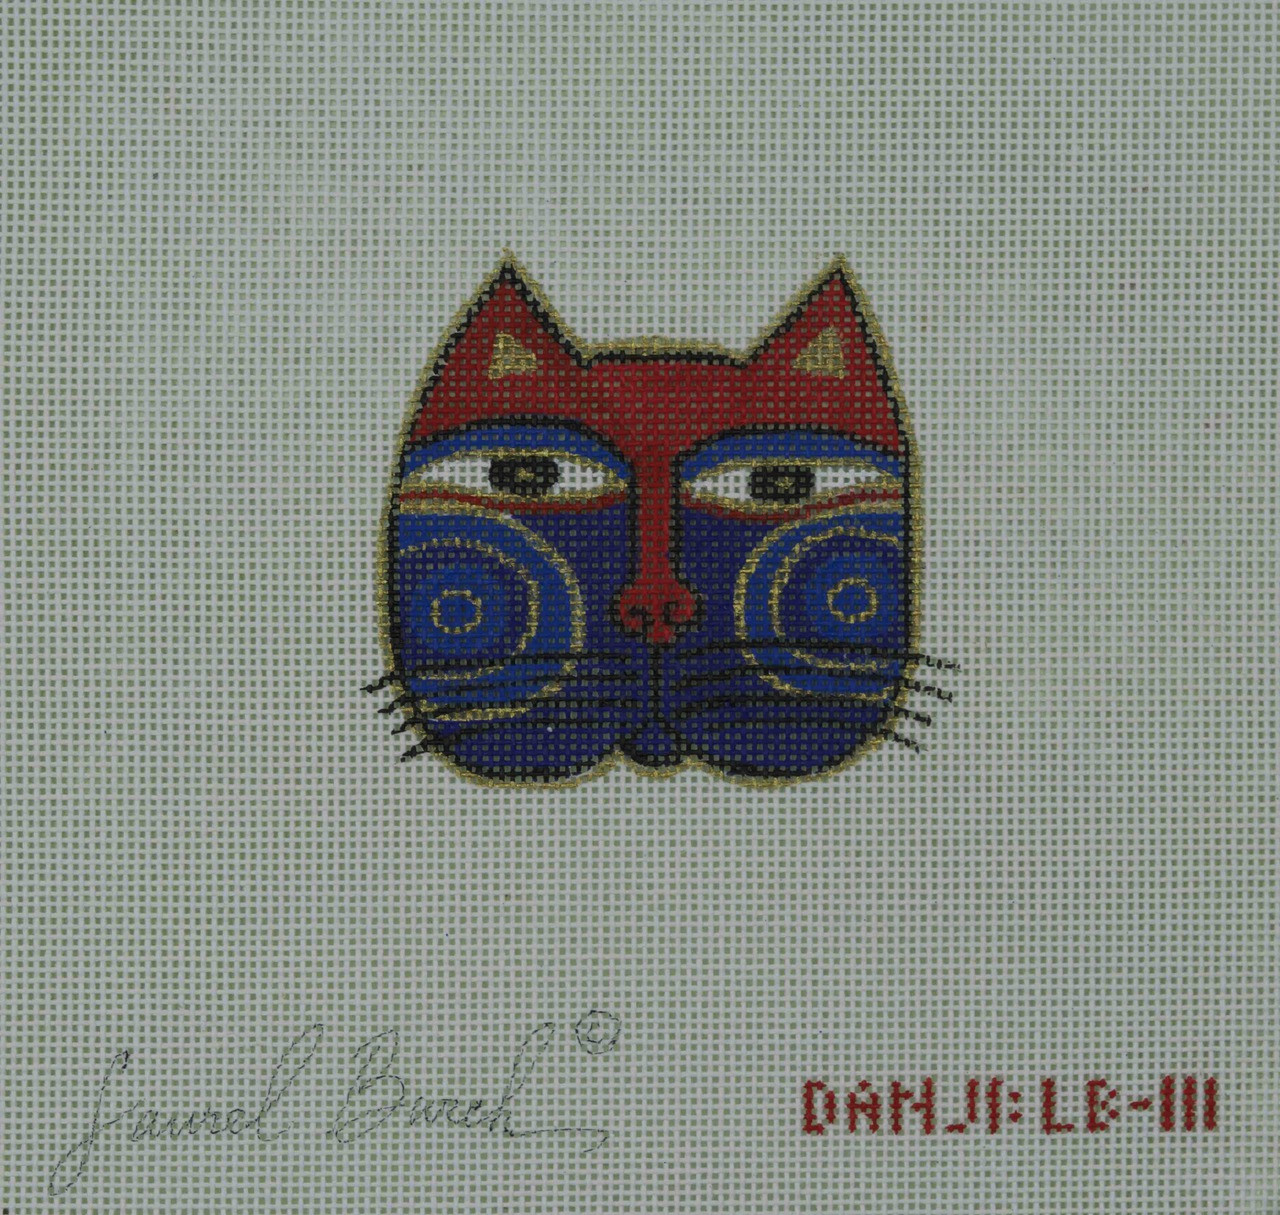 Hand-Painted Needlepoint Canvas - Danji Designs - LB-111 - Cat